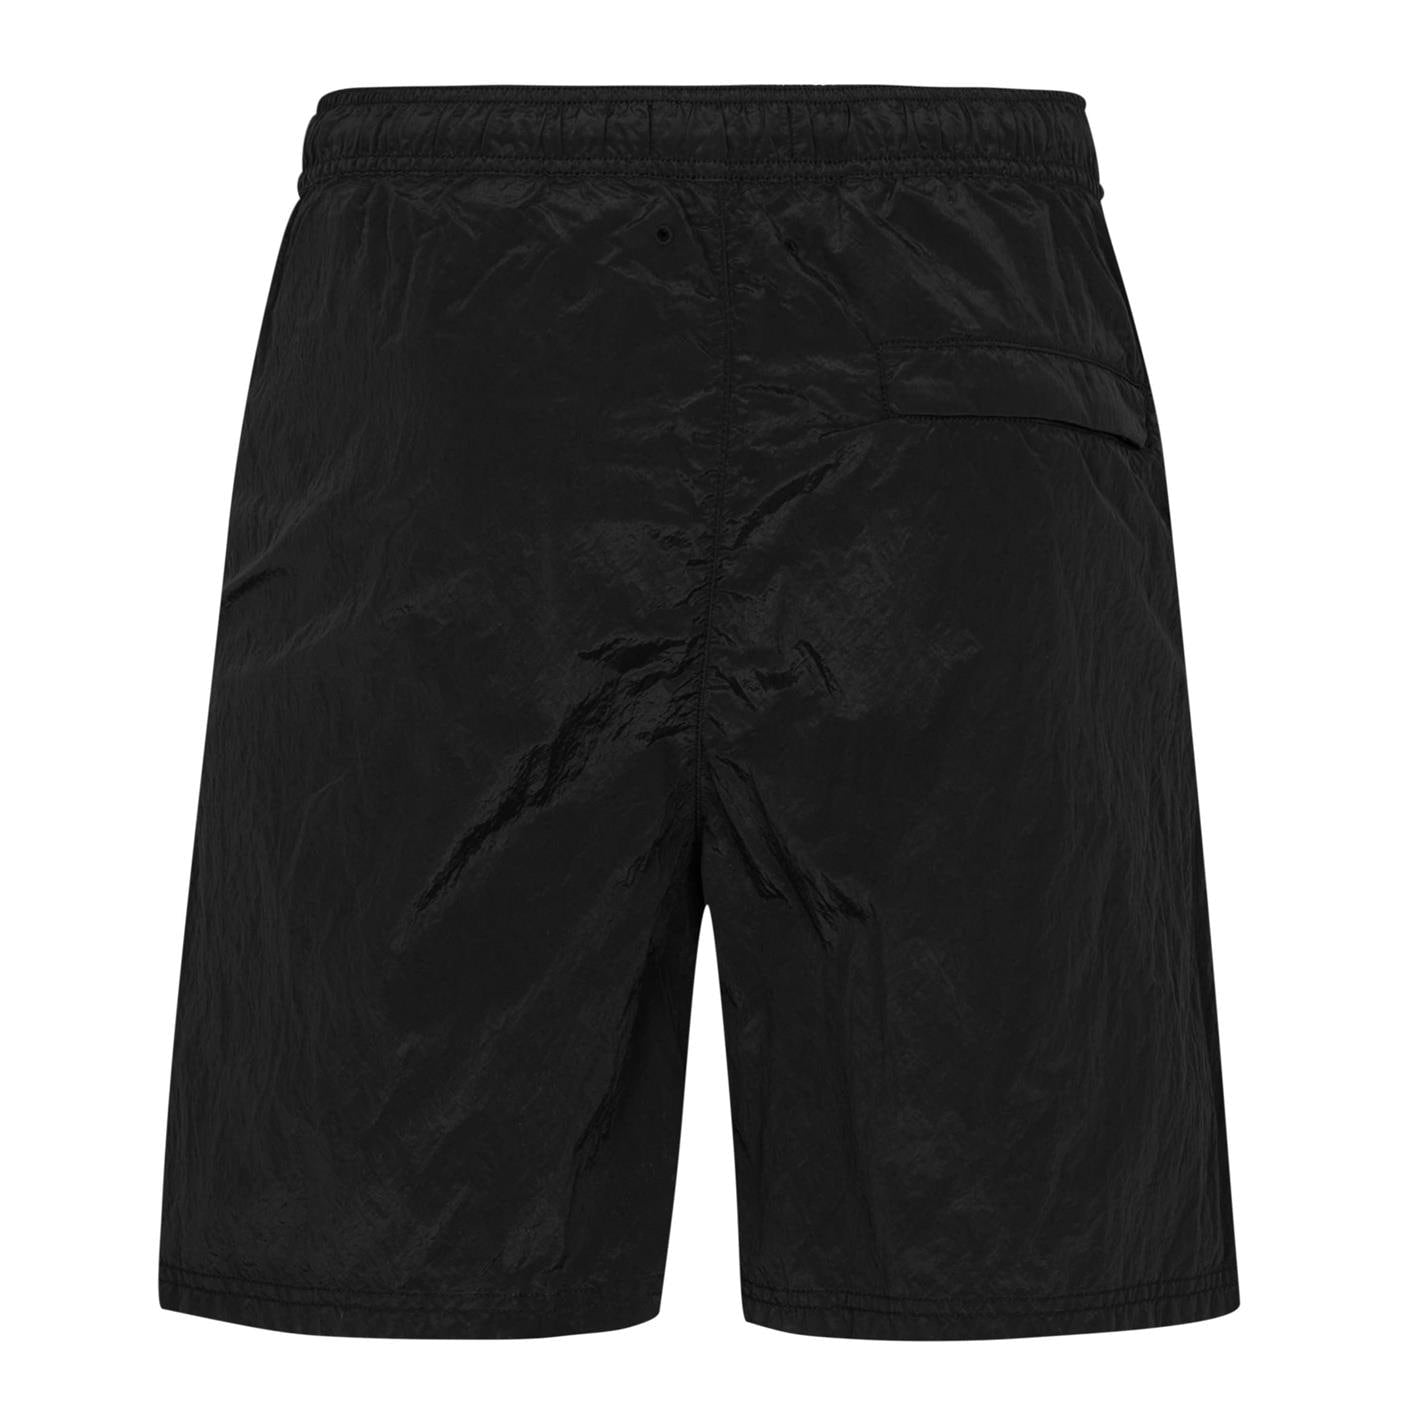 Stone Island Chrome Swim Shorts Black | Boinclo ltd | Outlet Sale